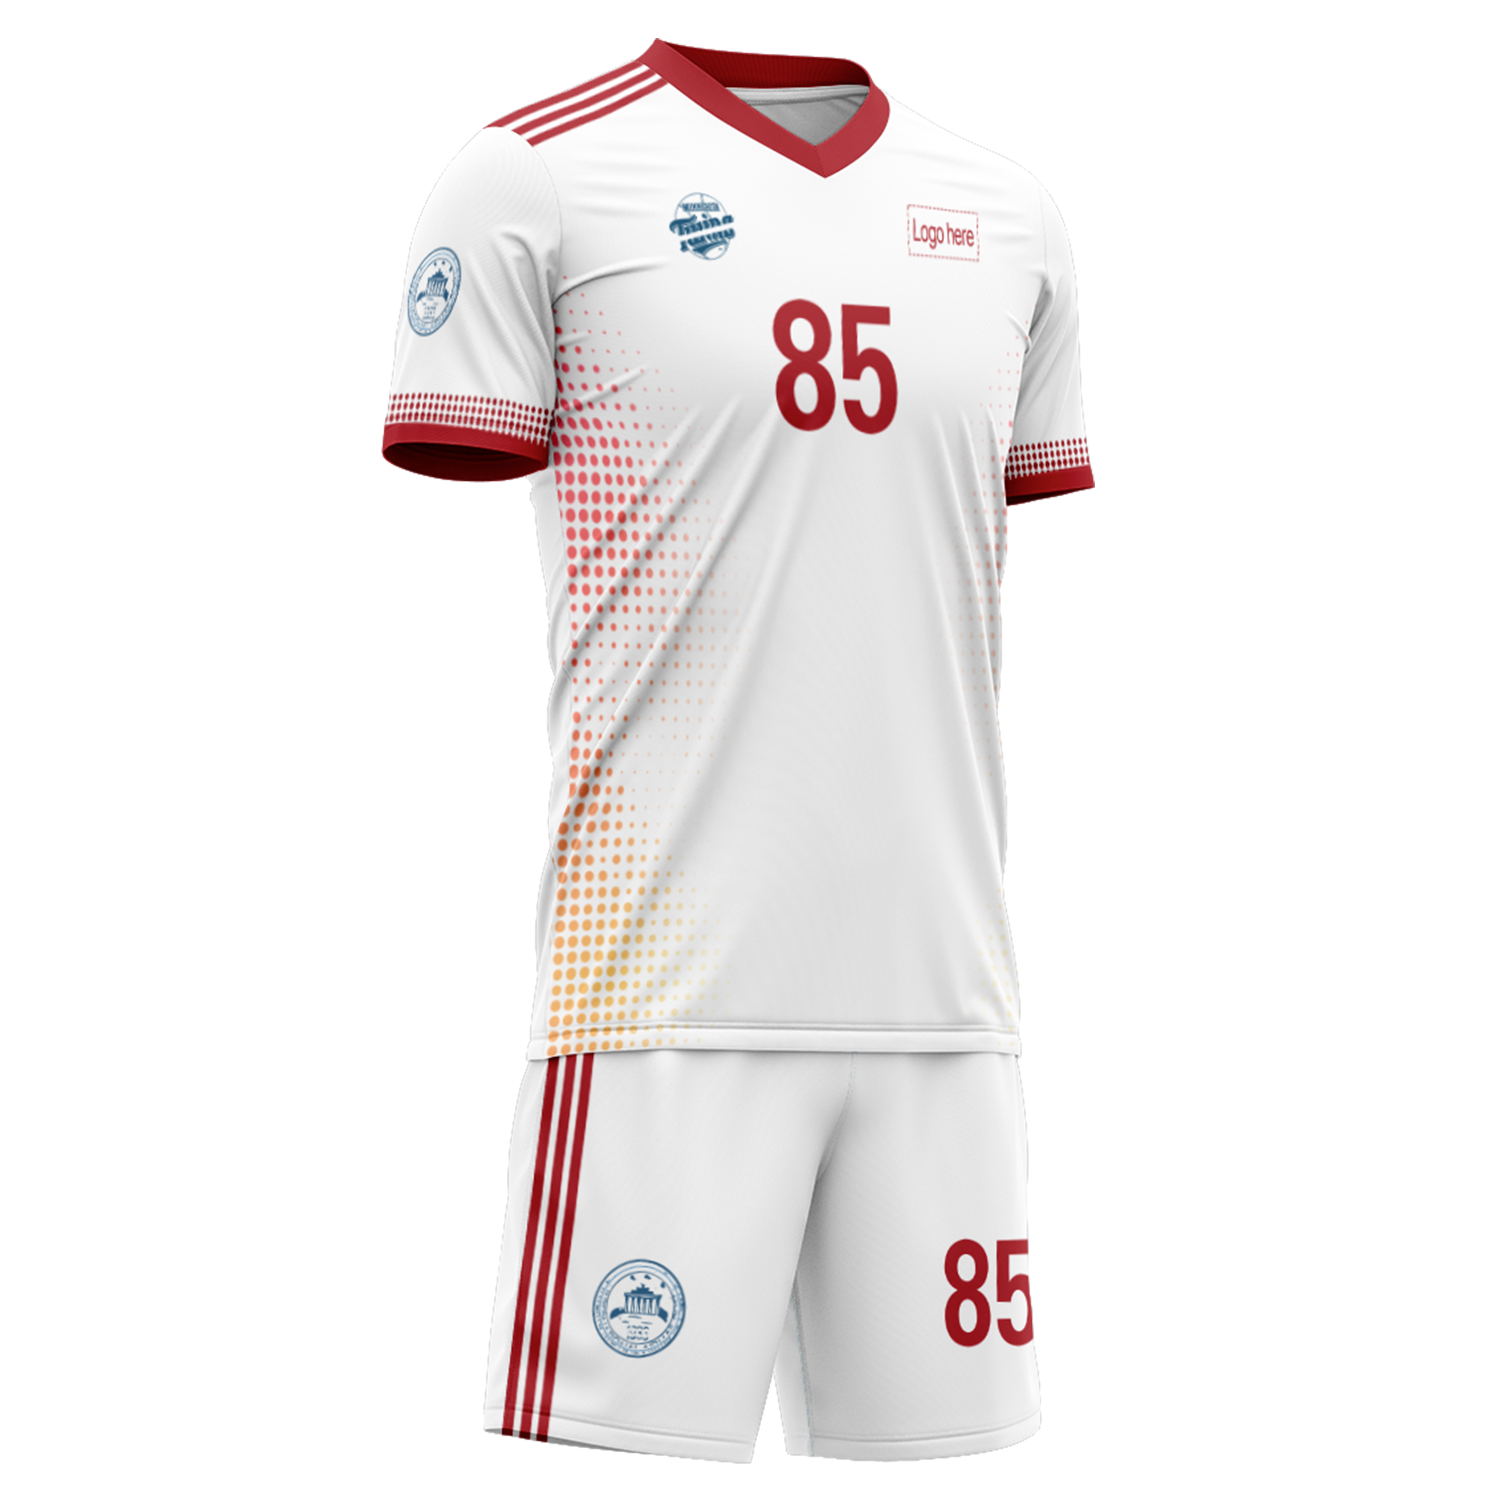 Custom Tunisia Team Football Suits Personalized Design Print on Demand Soccer Jerseys